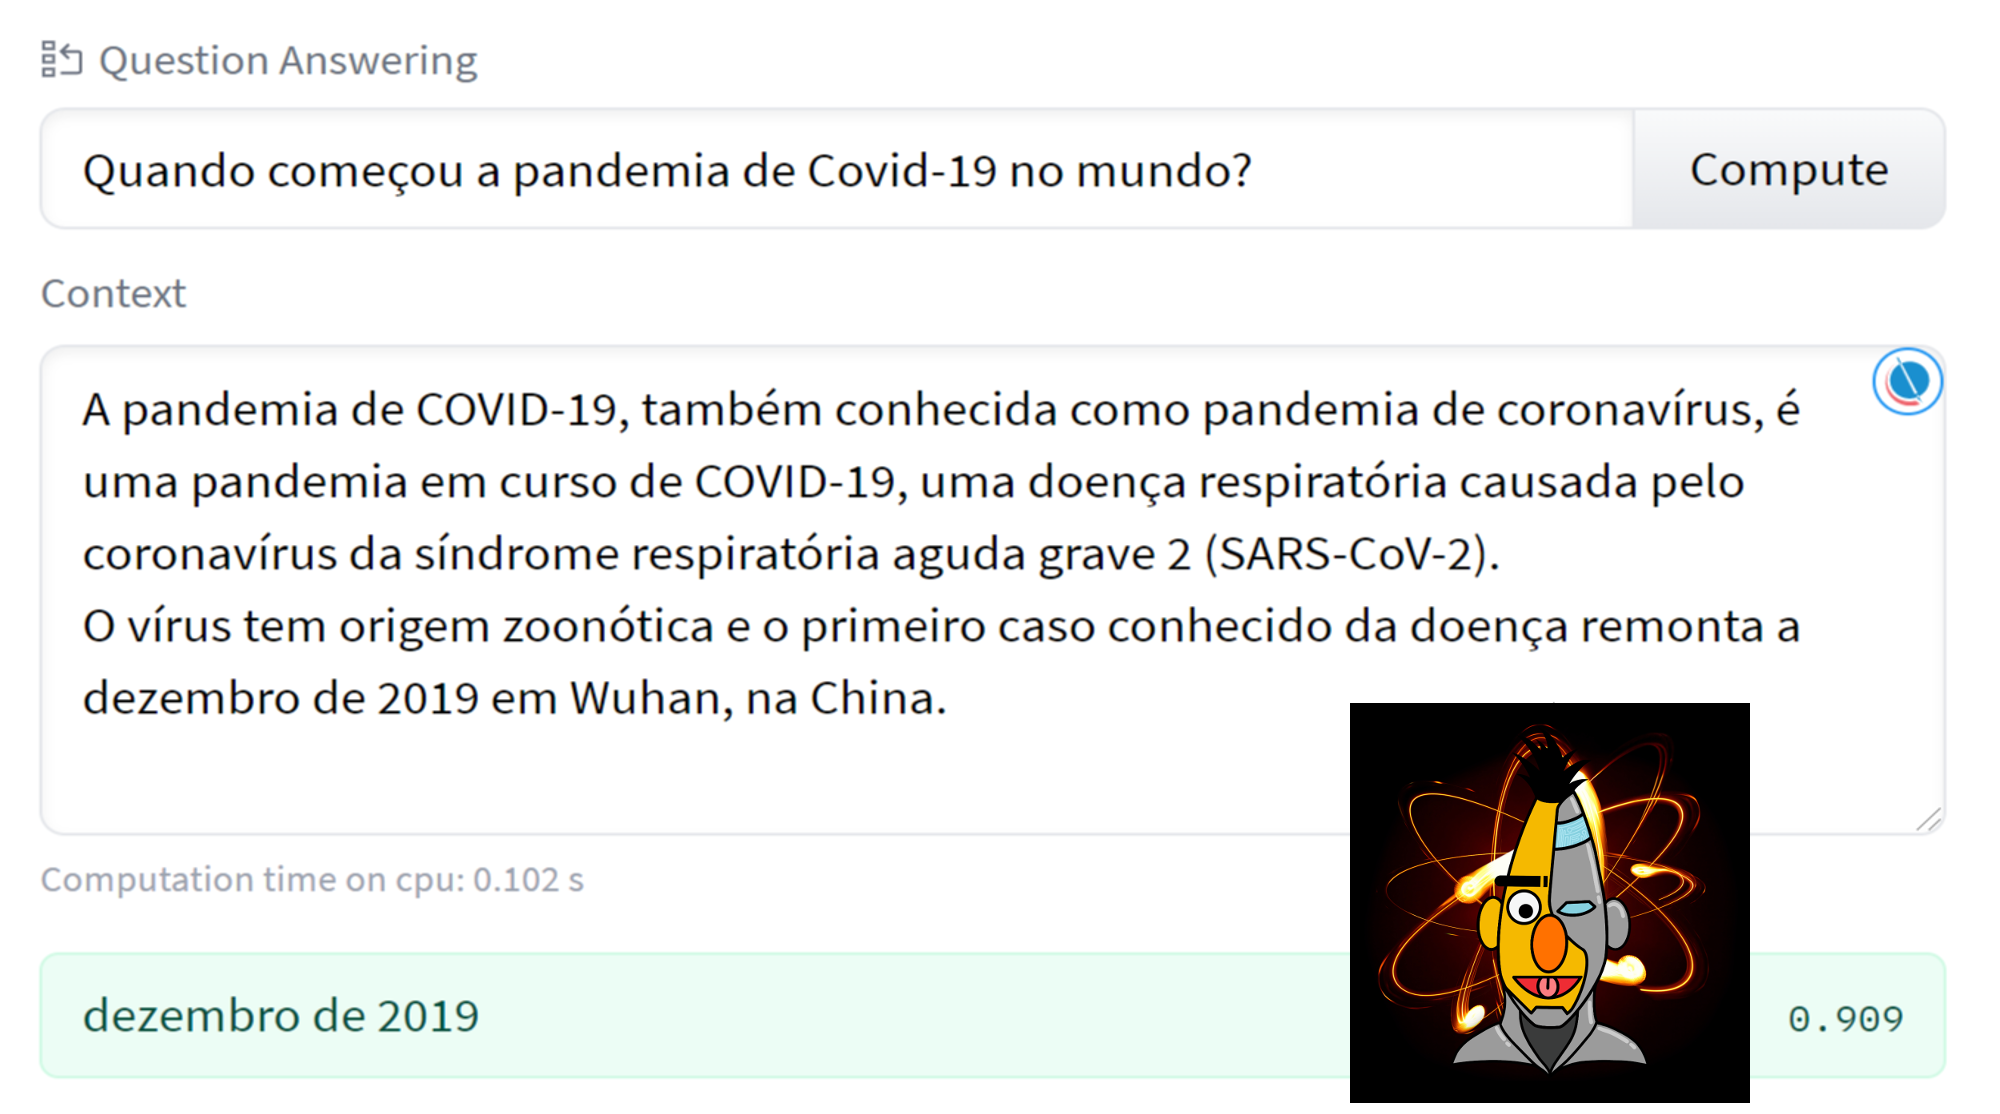 vocab.txt · neuralmind/bert-large-portuguese-cased at main